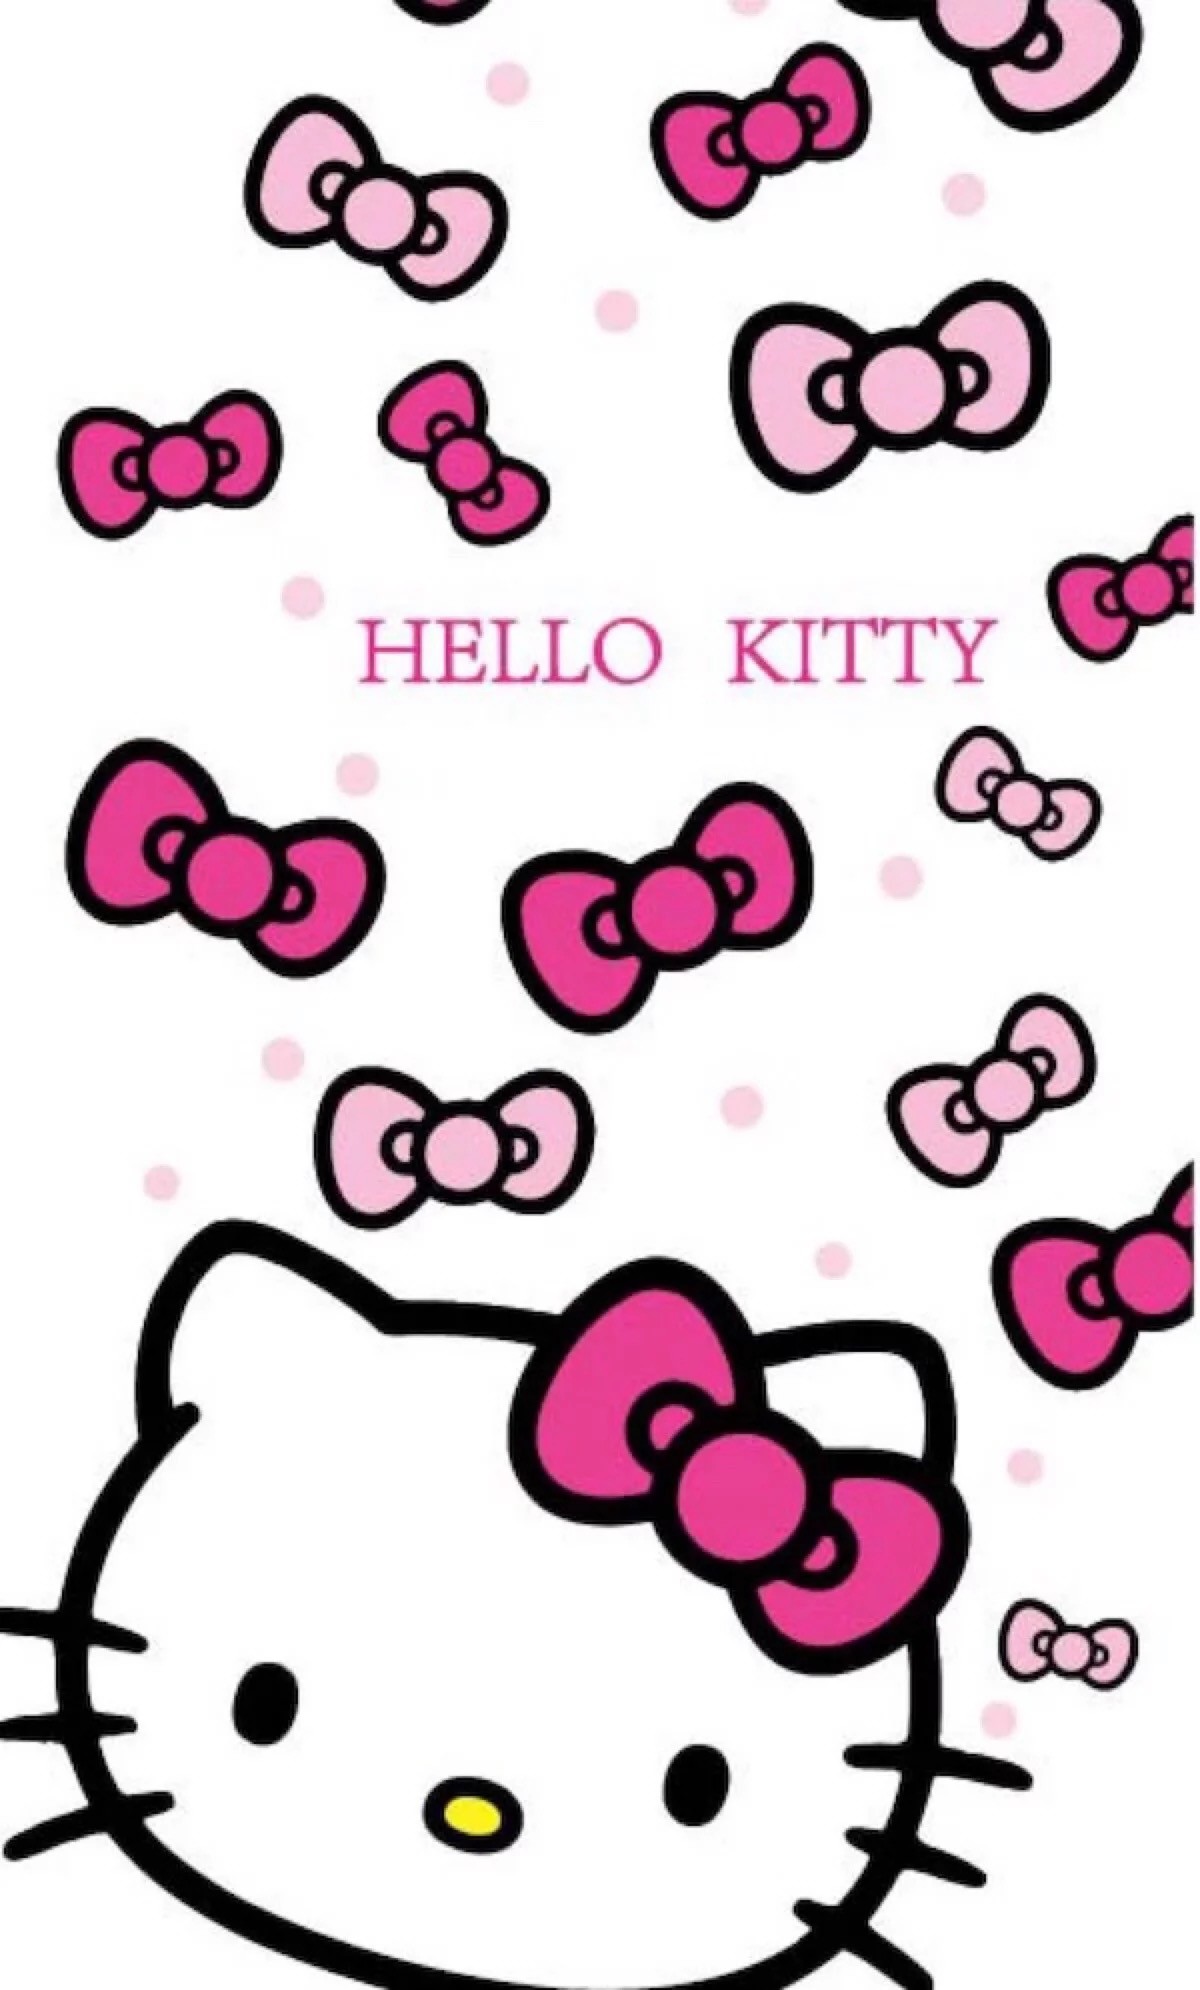 1200x1990 Hello Kitty Wallpaper, Kawaii Wallpaper, Hello Kitty Clothes, Hello Kitty  Tattoos, Hello Kitty Pictures, Hello Kitty Parties, Cell Phone Wallpapers,  ...